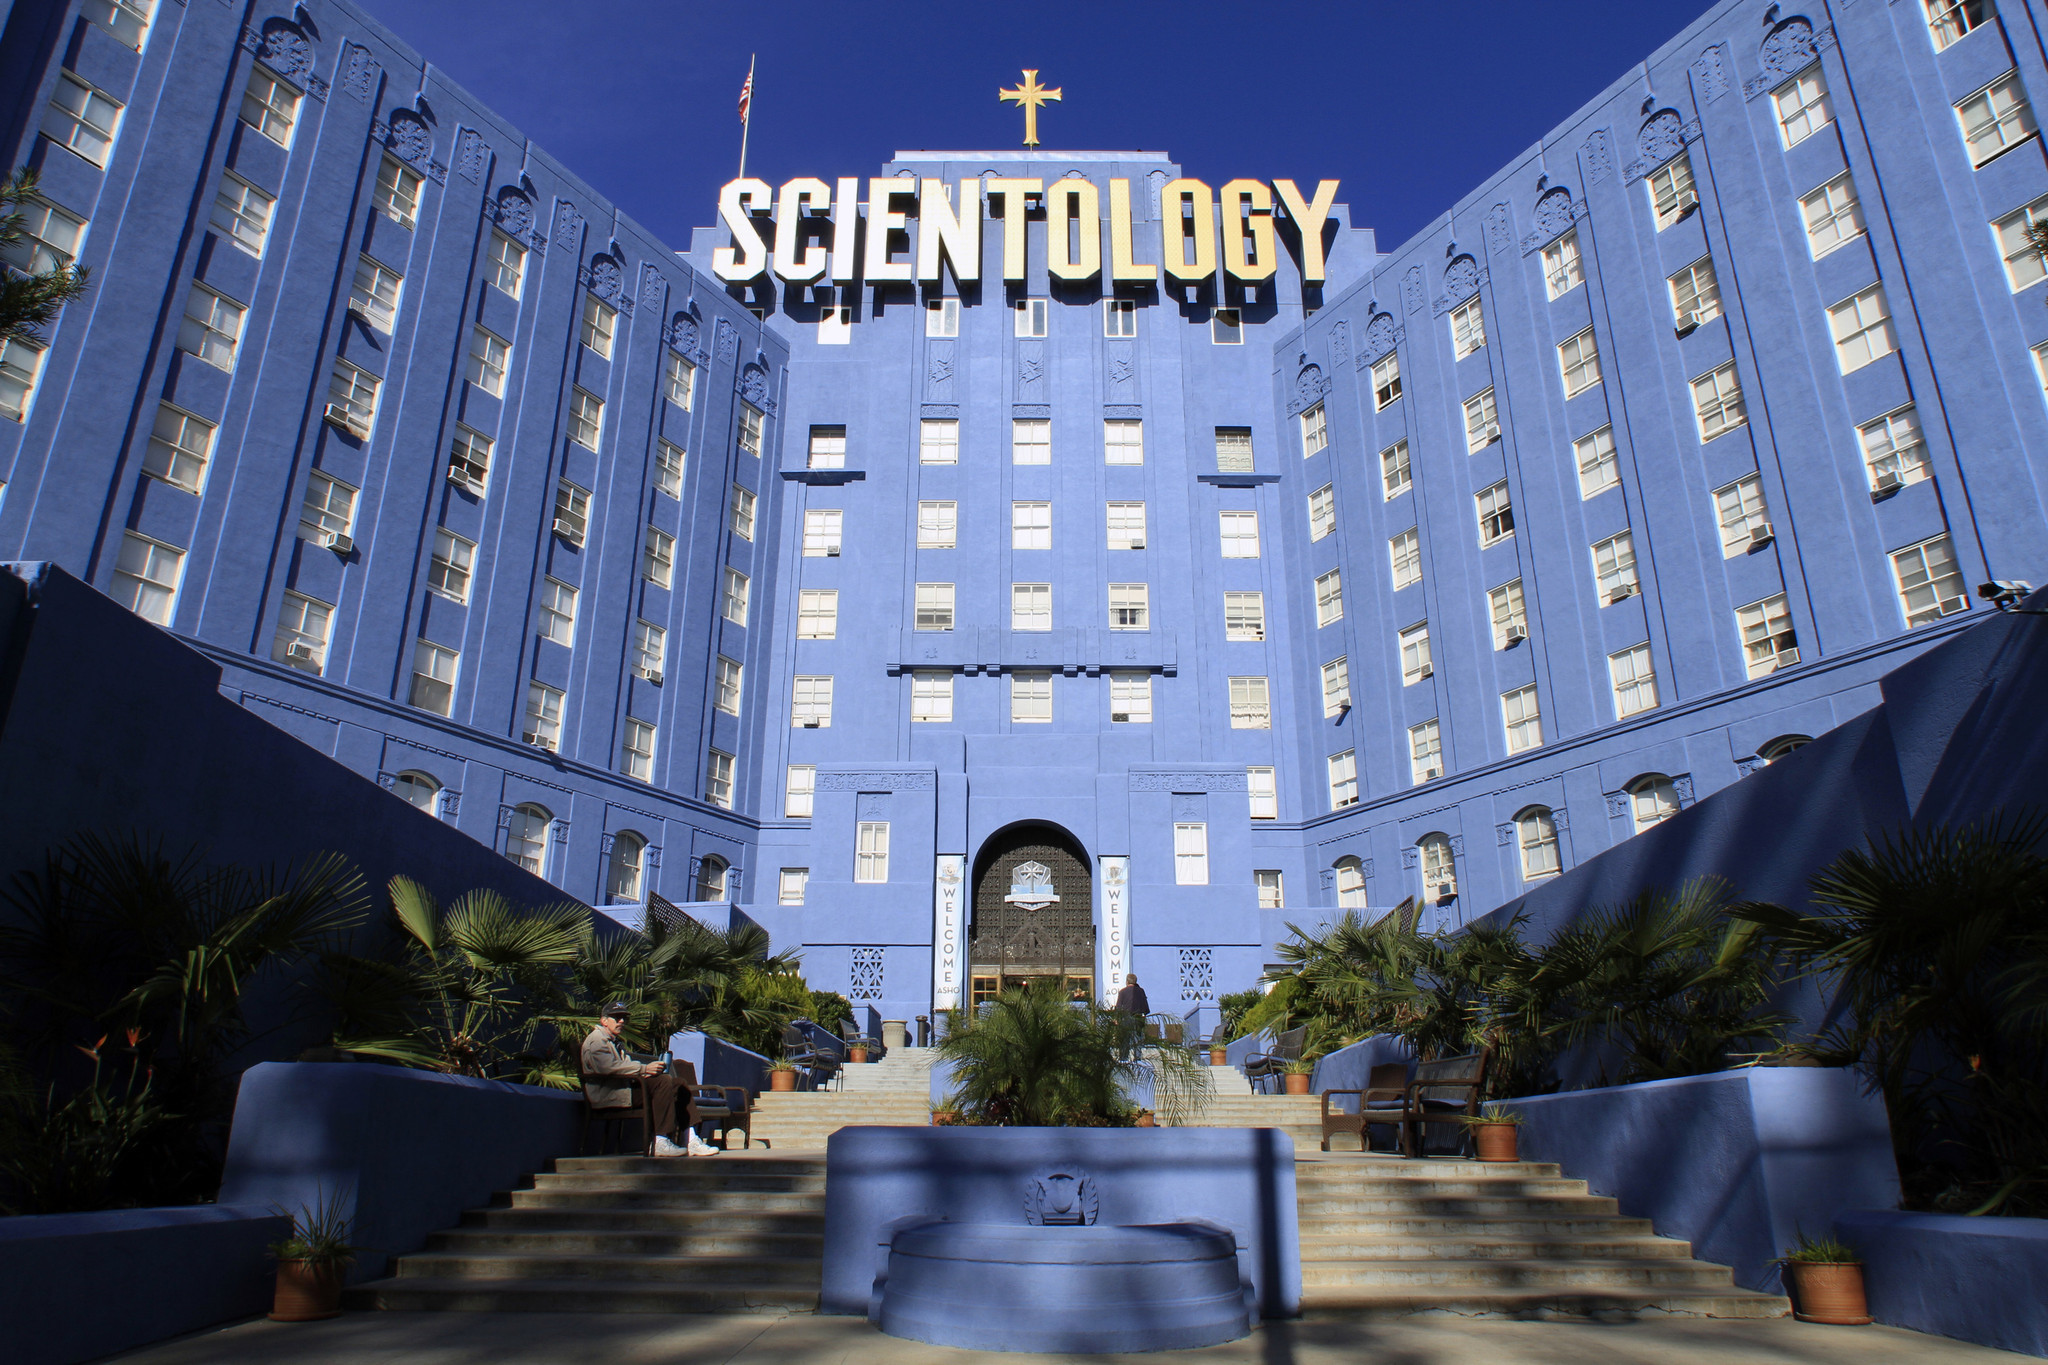 http://www.trbimg.com/img-5527216b/turbine/la-scientology-investigations-reporting-archive-20150409